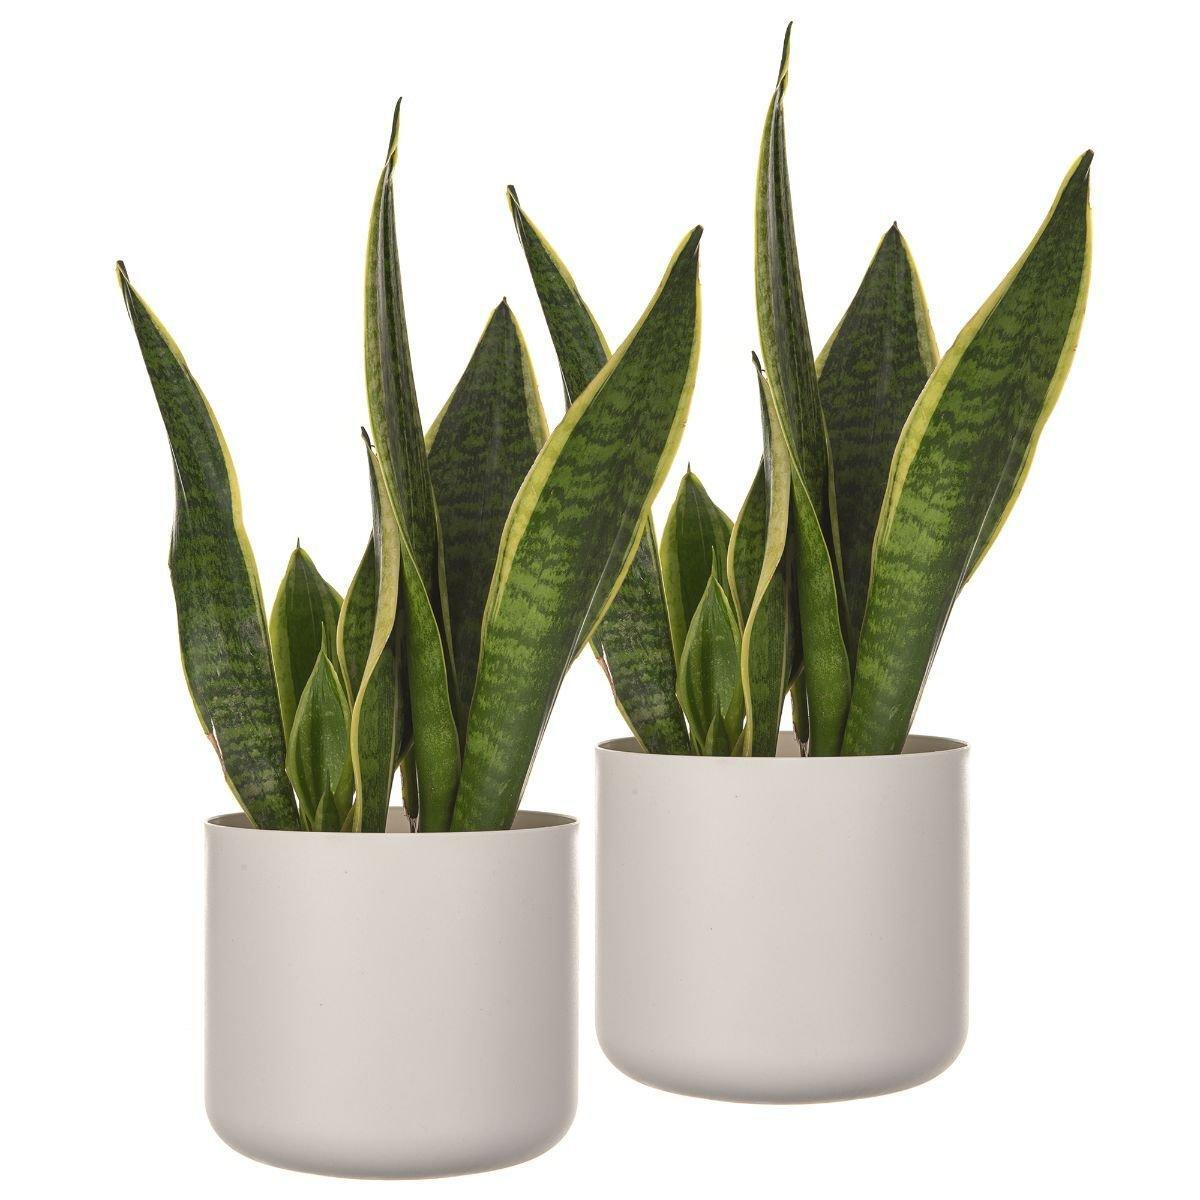 14cm Plain Round Plastic Plant Pot in Sleek White - image 1